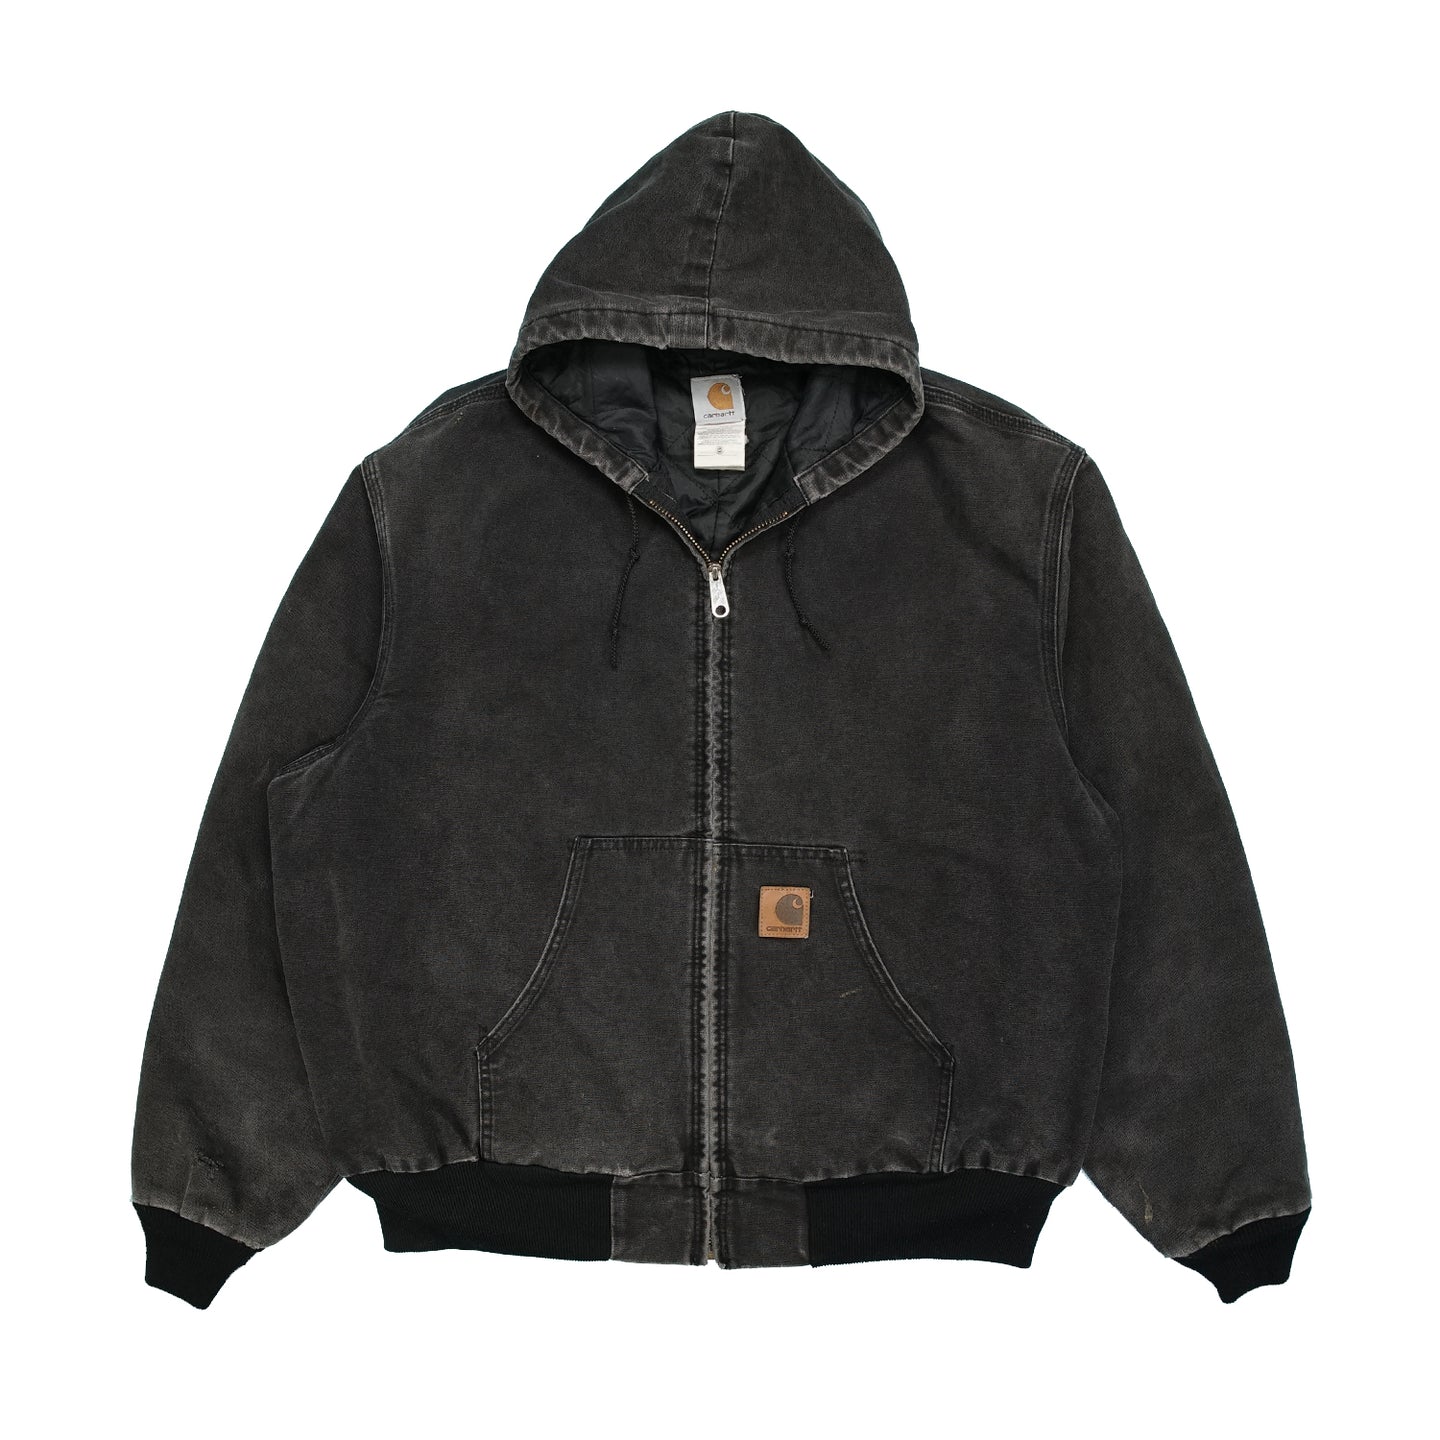 Vintage Carhartt full zip faded black jacket XXL